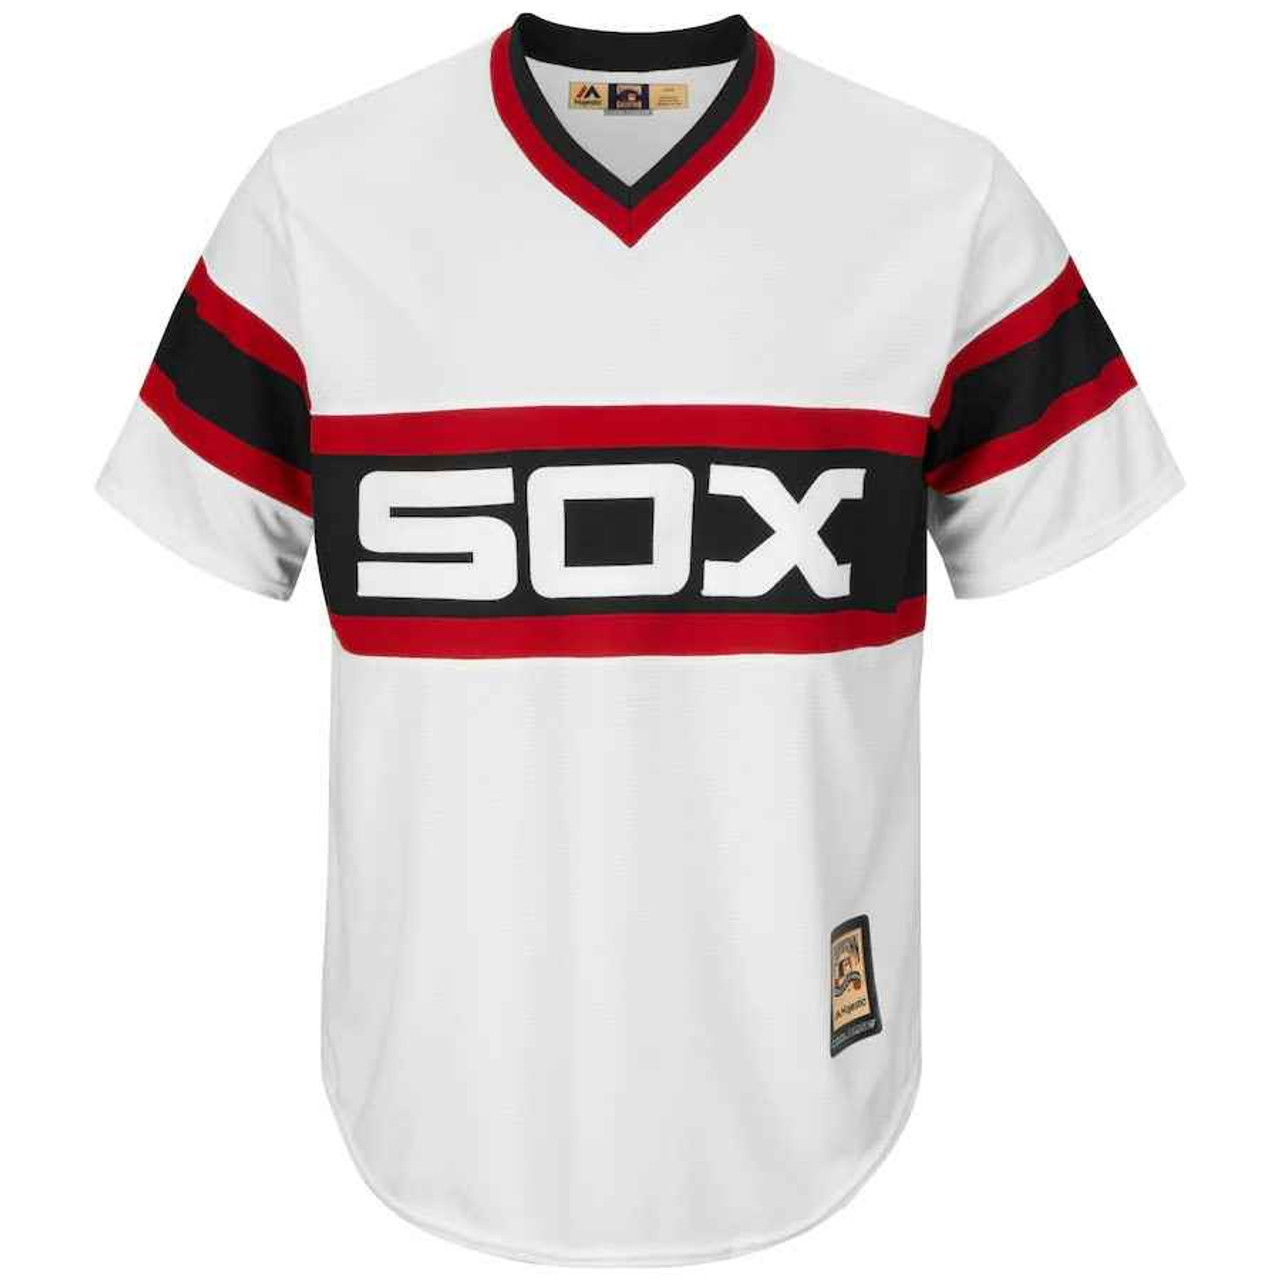 1983 chicago white sox uniforms